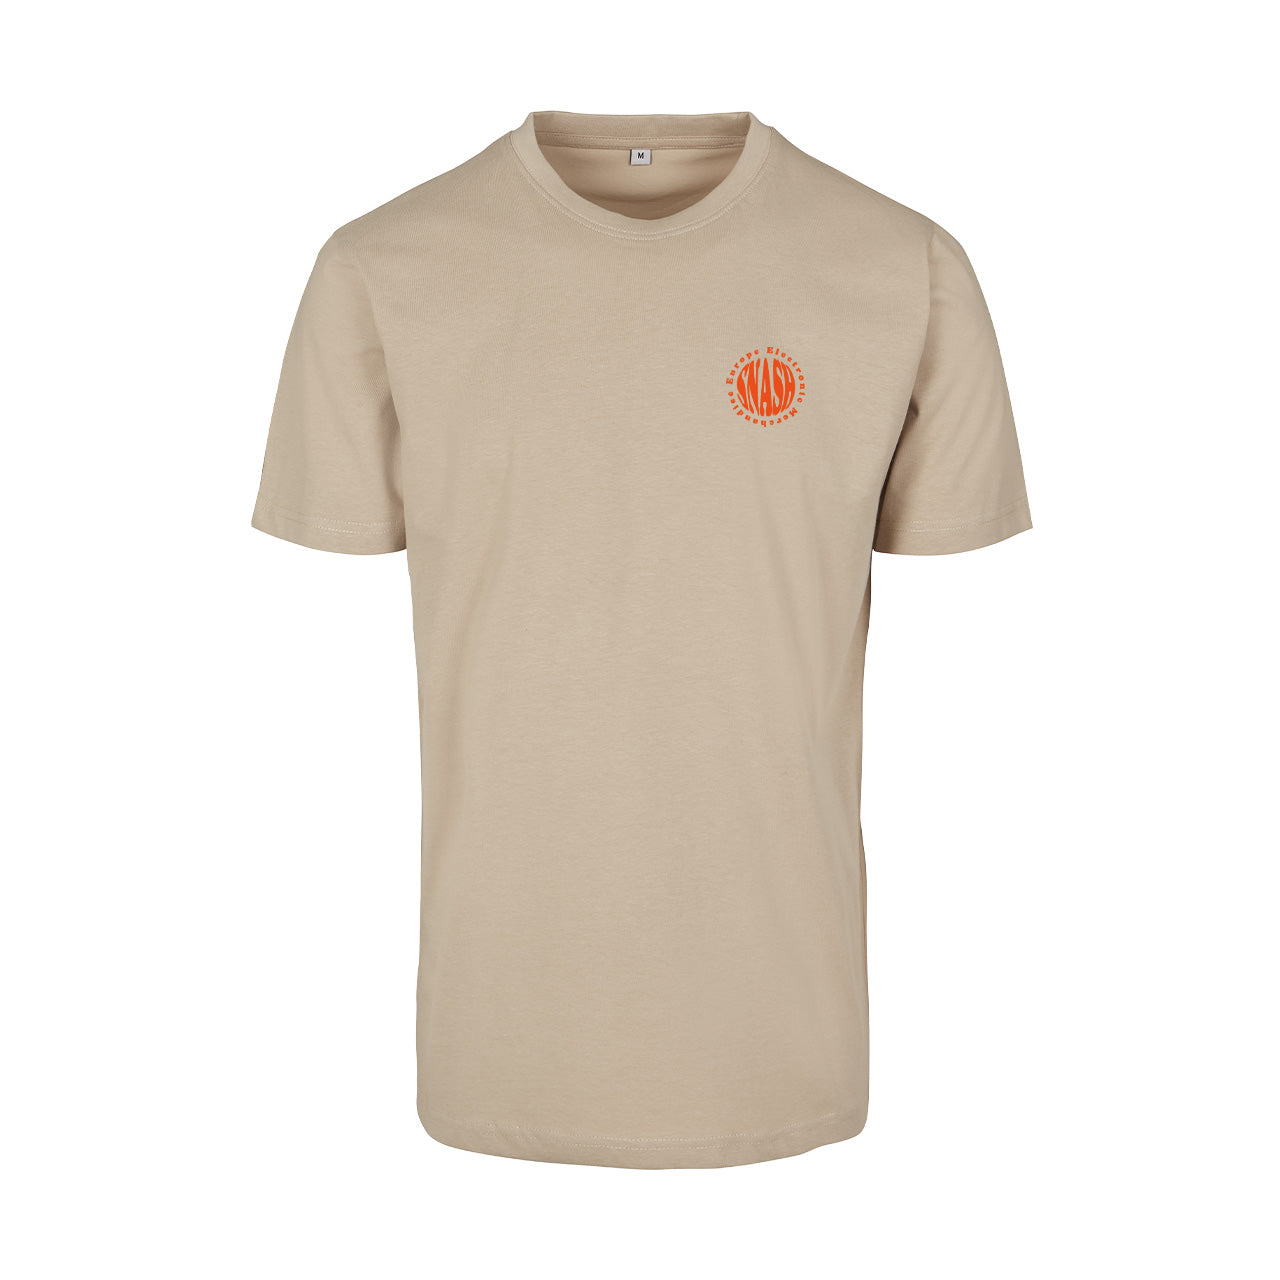 Snash - Electronic Merchandise T-Shirt